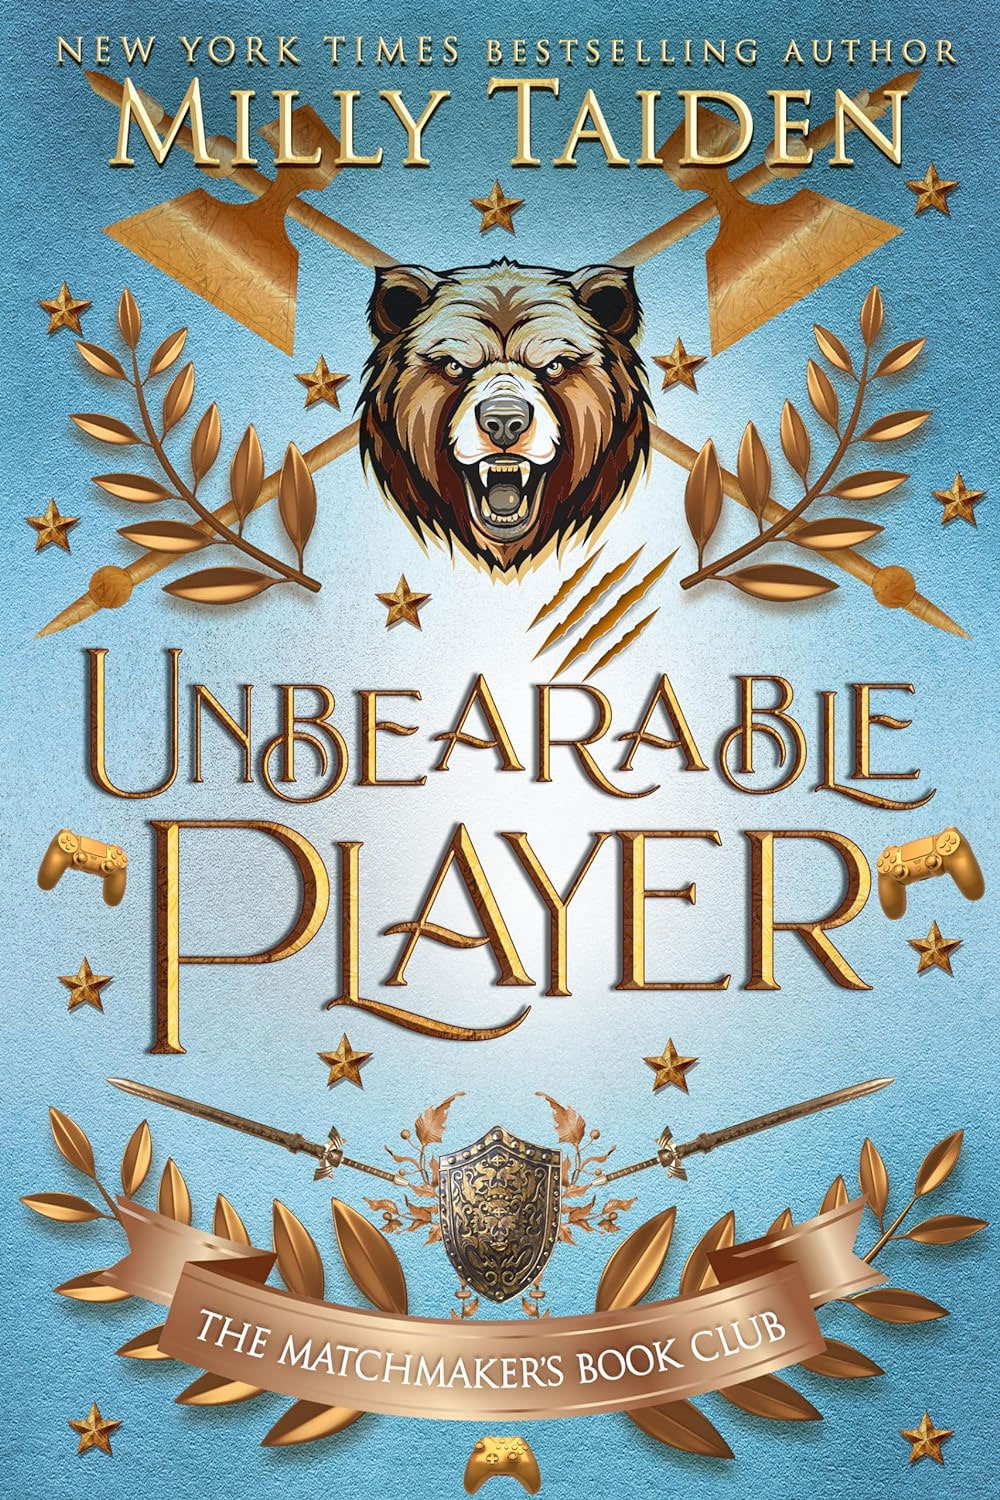 Unbearable Player